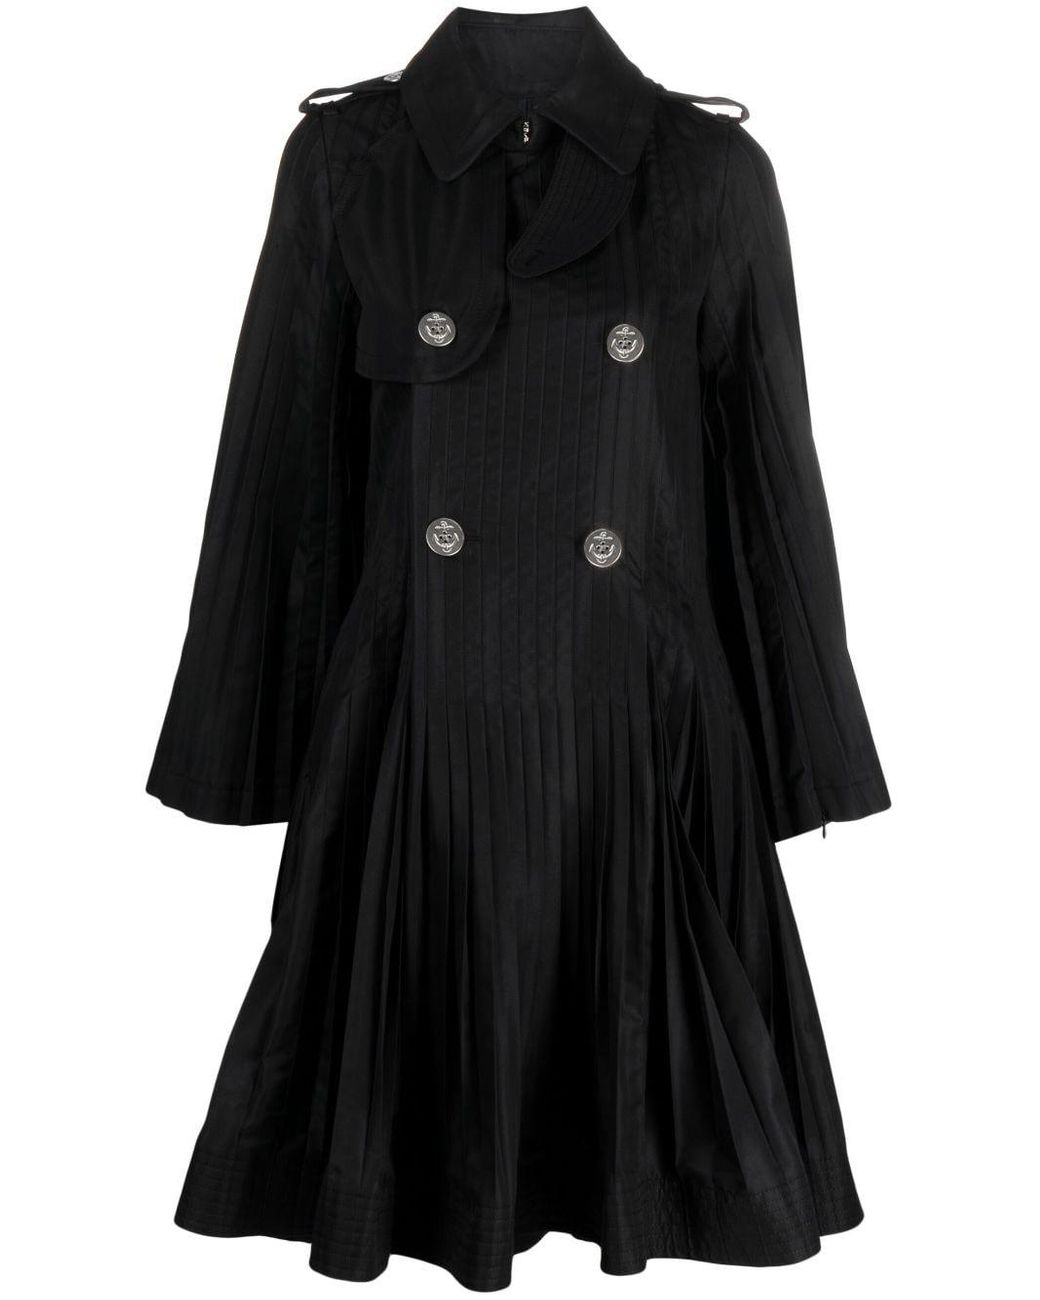 Sacai Double-breasted Peplum Coat in Black | Lyst